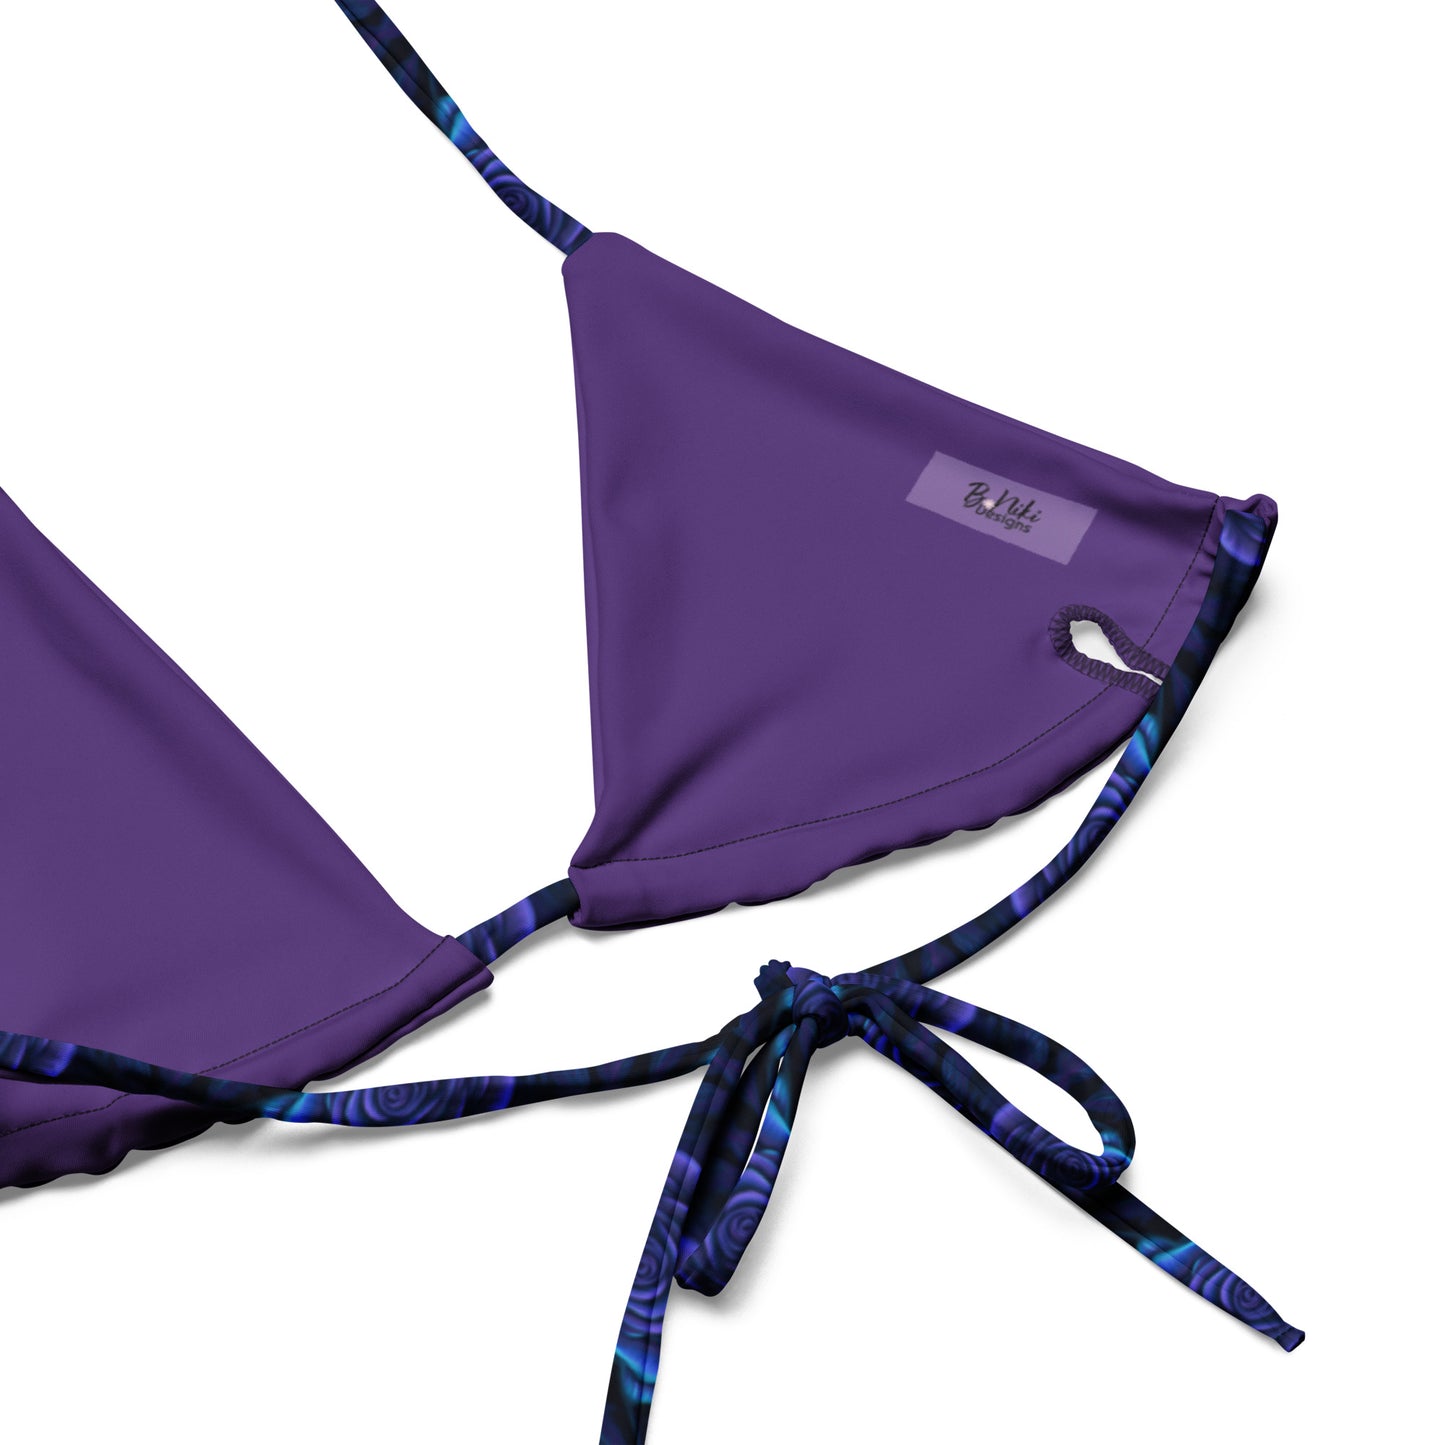 Luminous Purple Roses All-over Print Recycled String Bikini